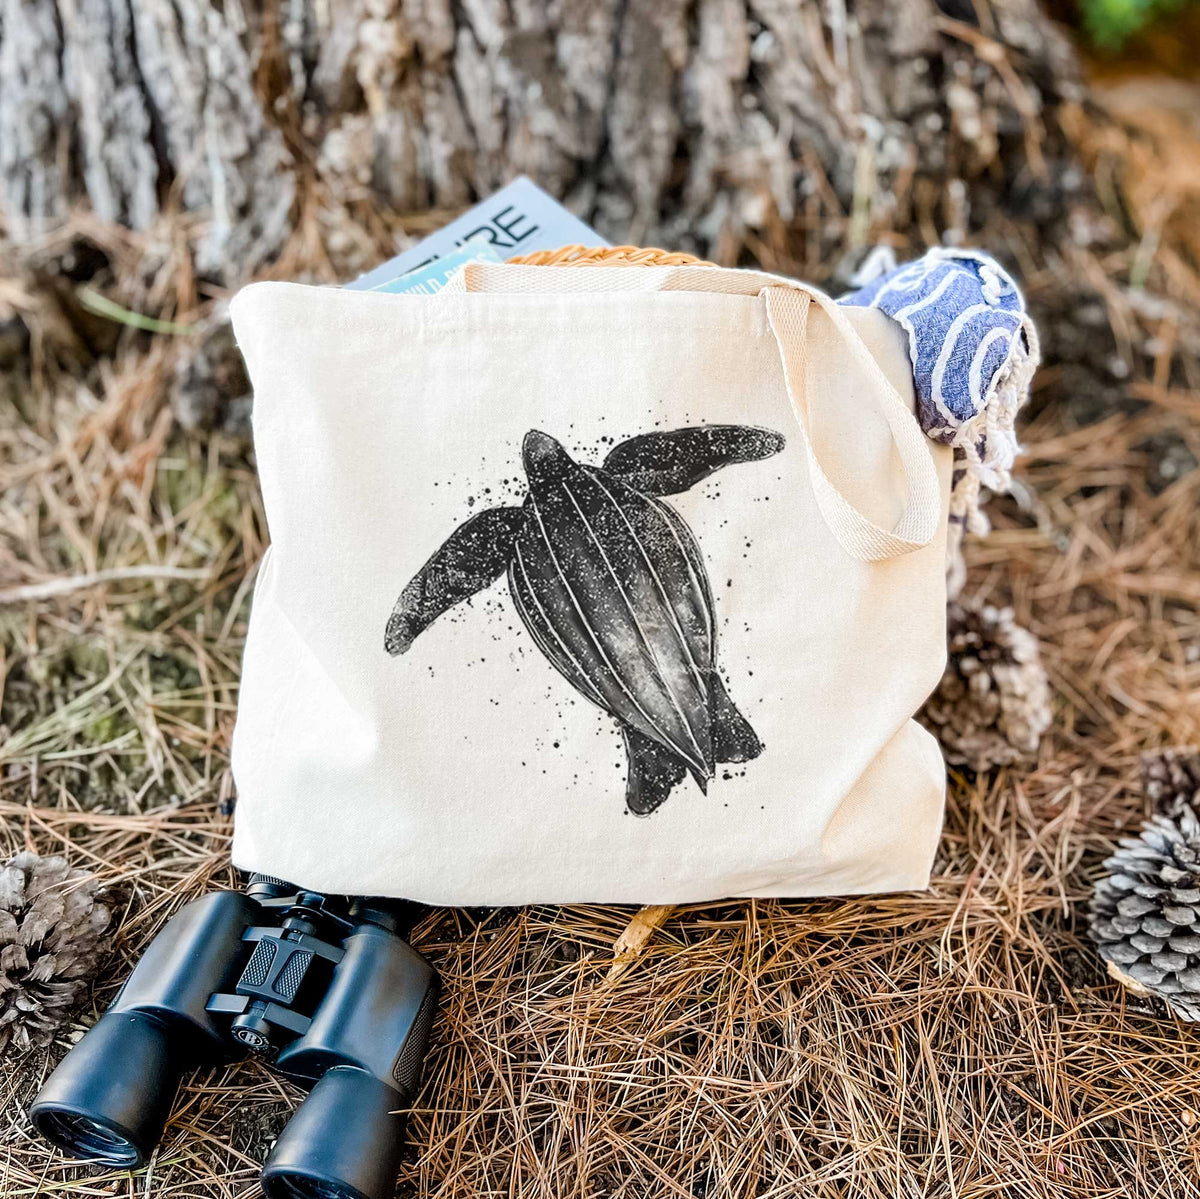 Leatherback - Dermochelys coriacea - Tote Bag